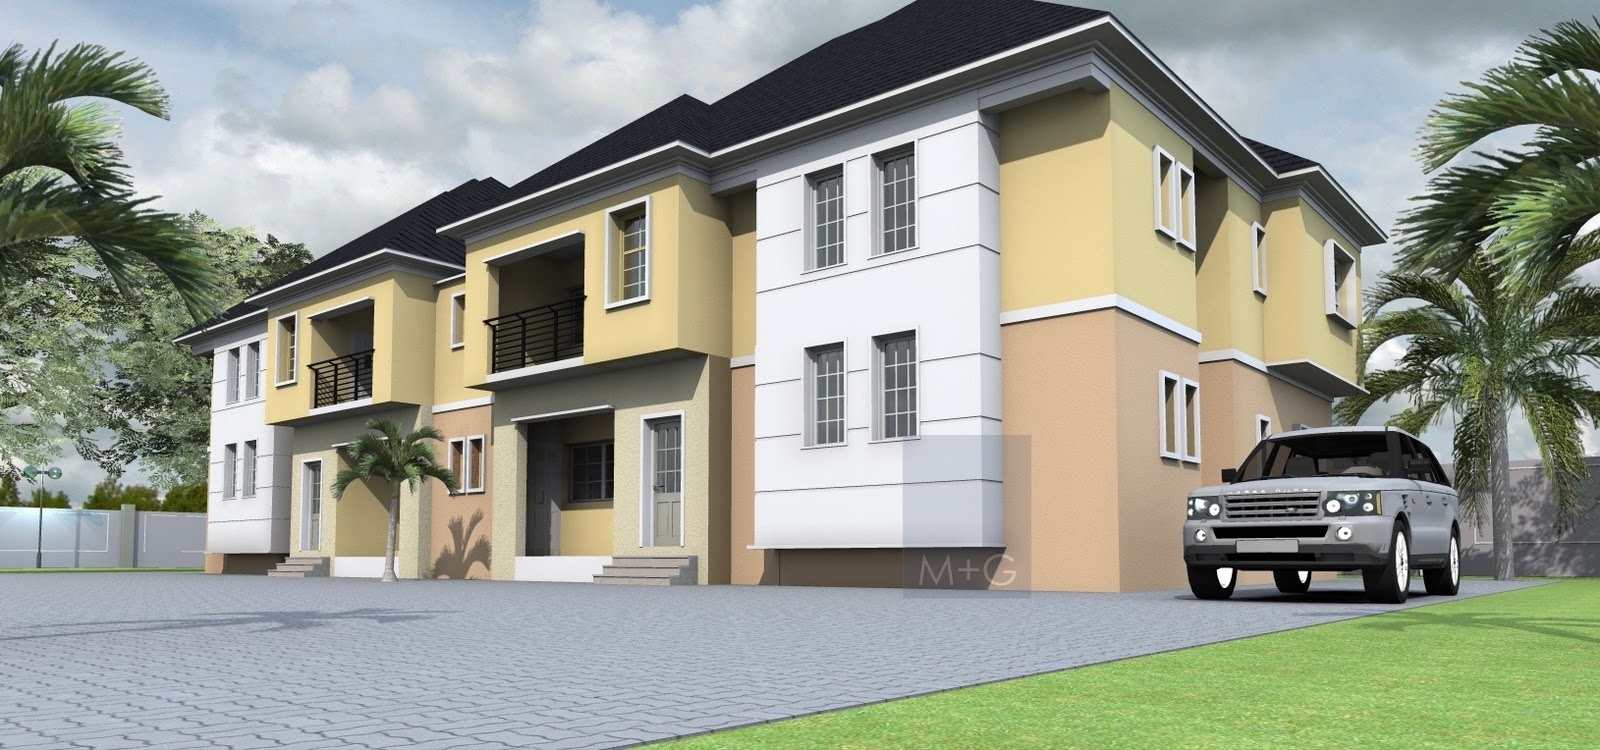 Astonishing contemporary nigerian residential architecture: 3 bedrooms flats (4 units) regarding wonderful three bedroom plan in nigeria